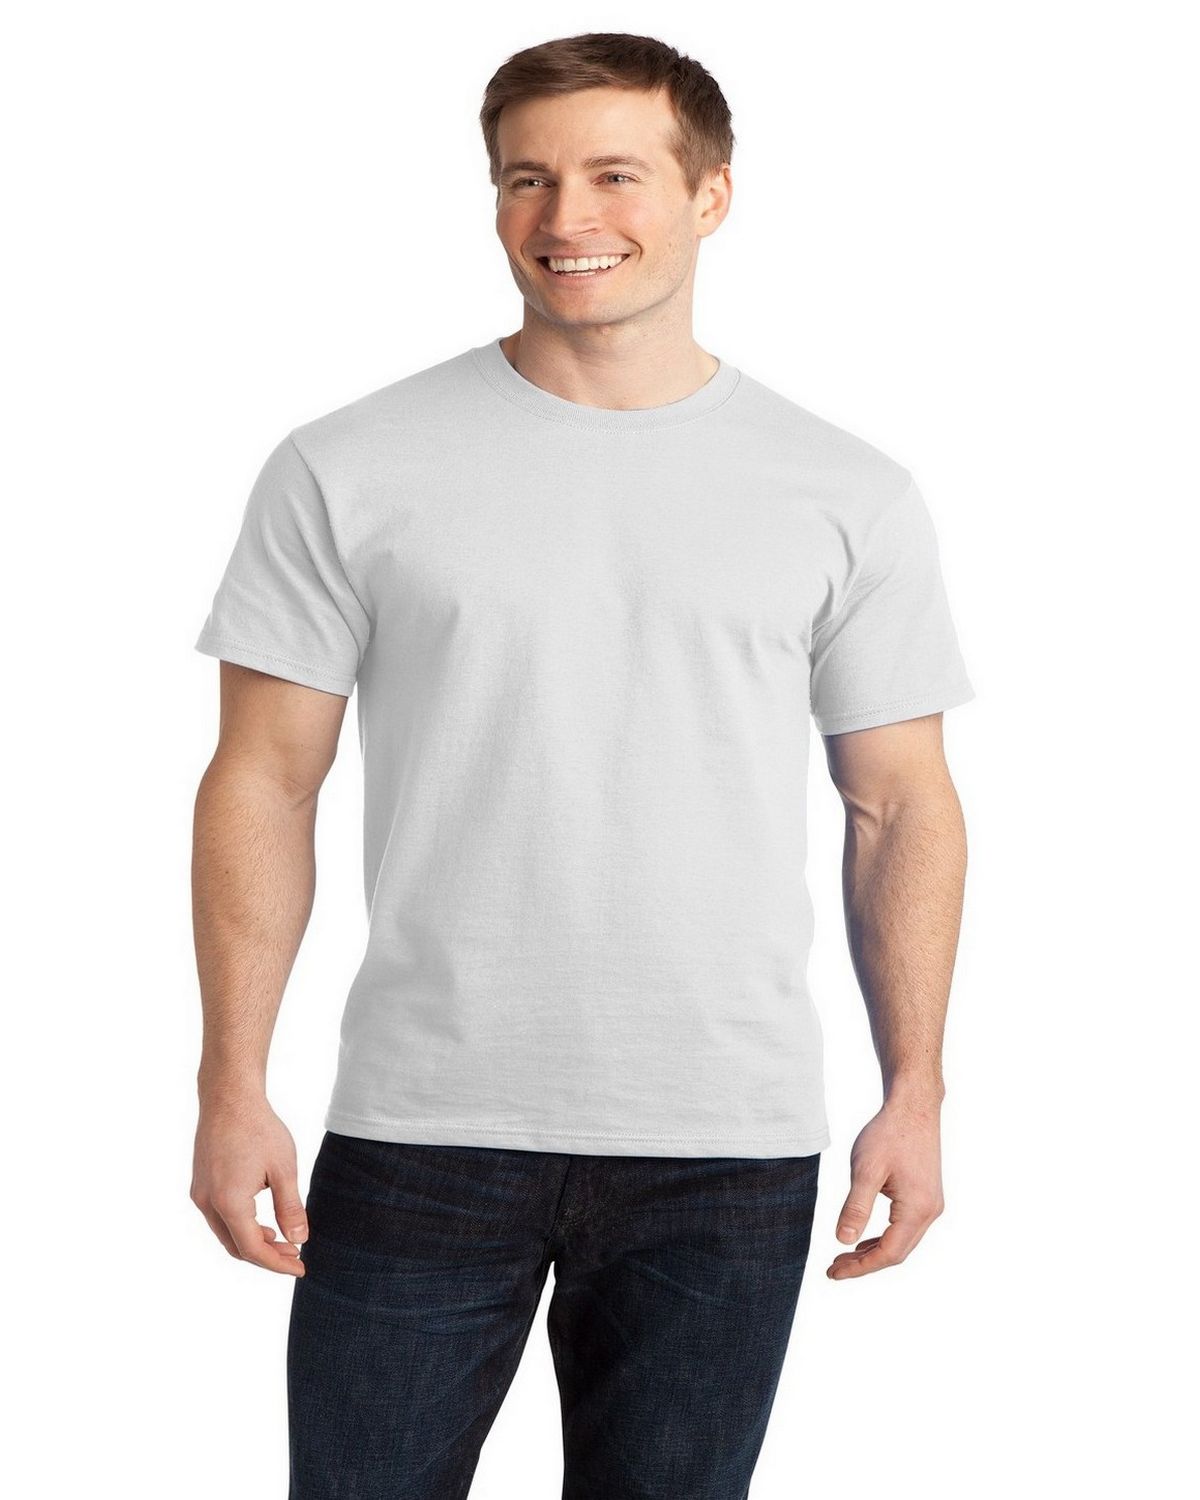 athletic cotton t shirts